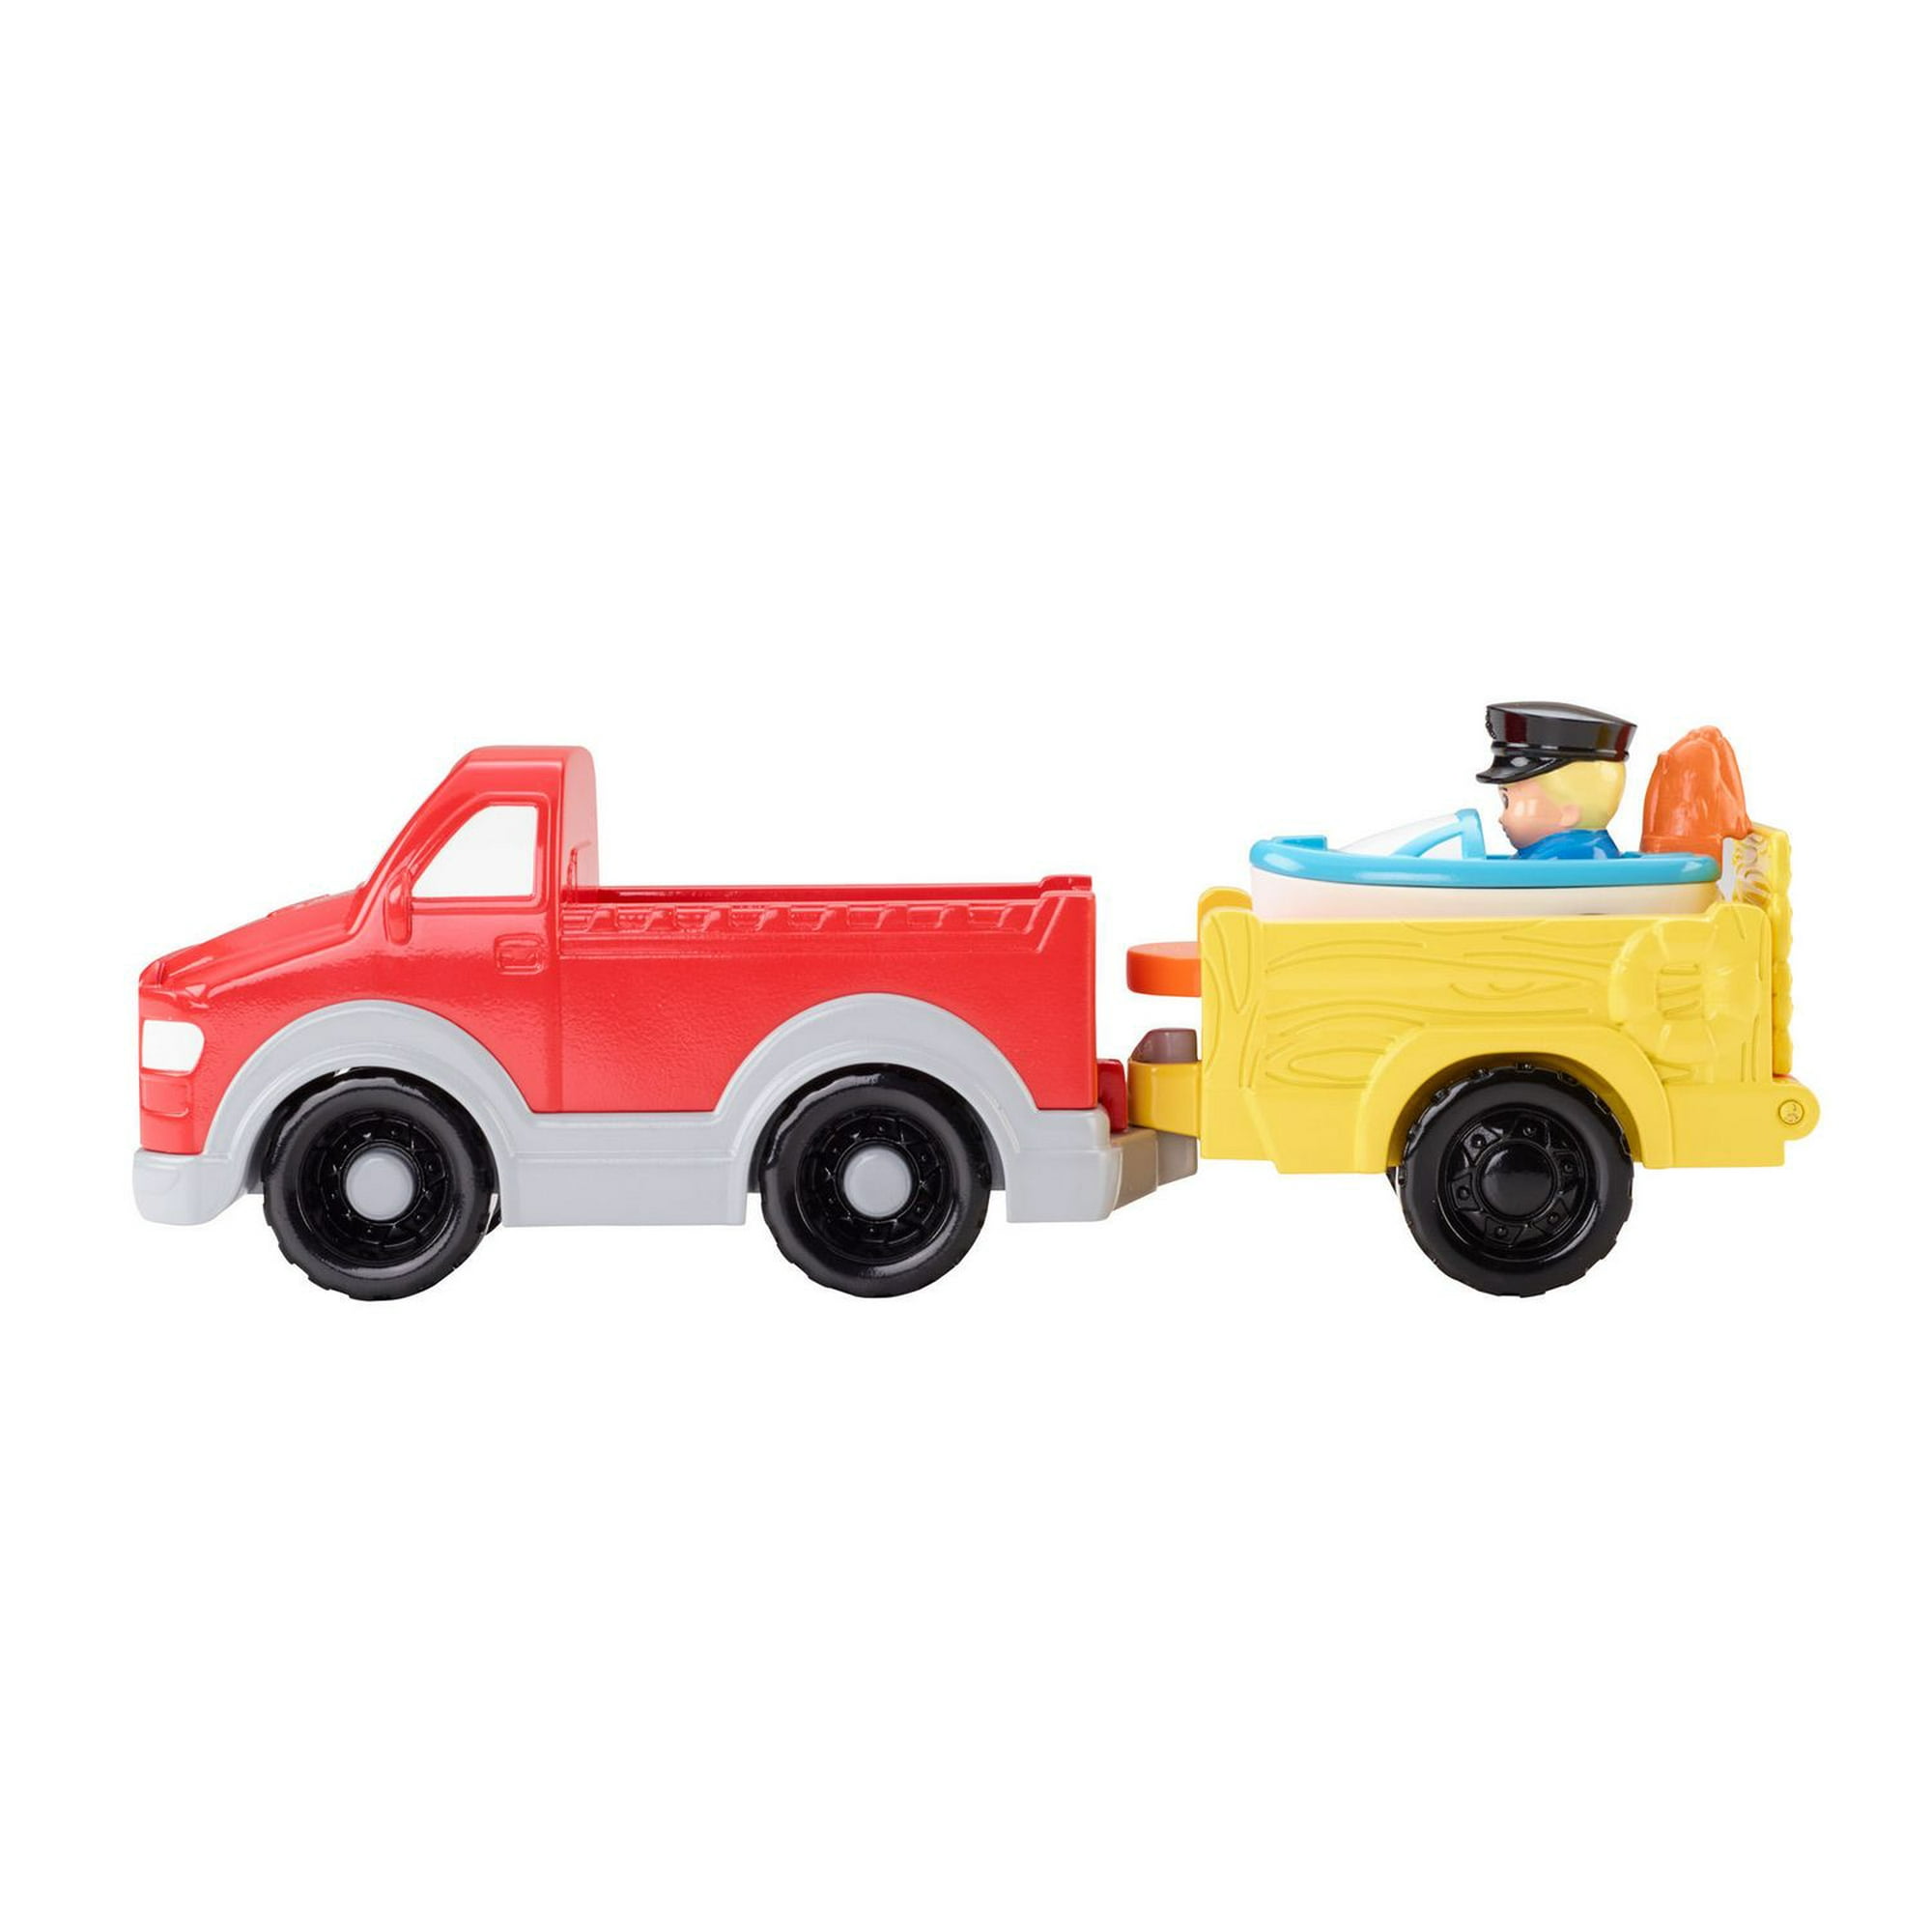 Fisher-Price Little People Wheelies Fishing Boat : : Toys